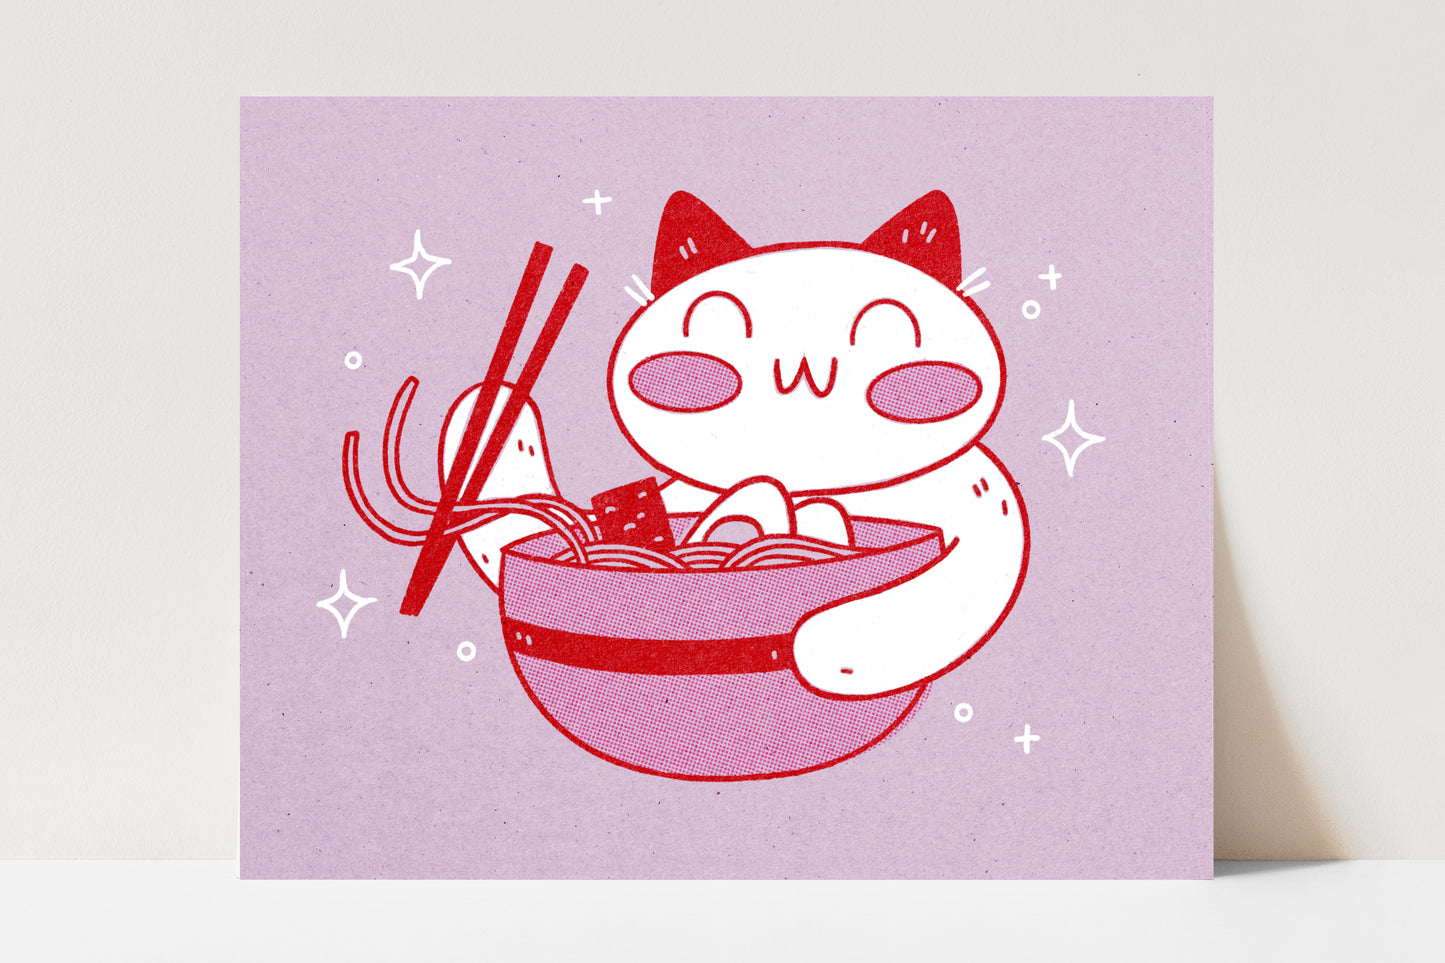 Print of an illustration of cat eating ramen